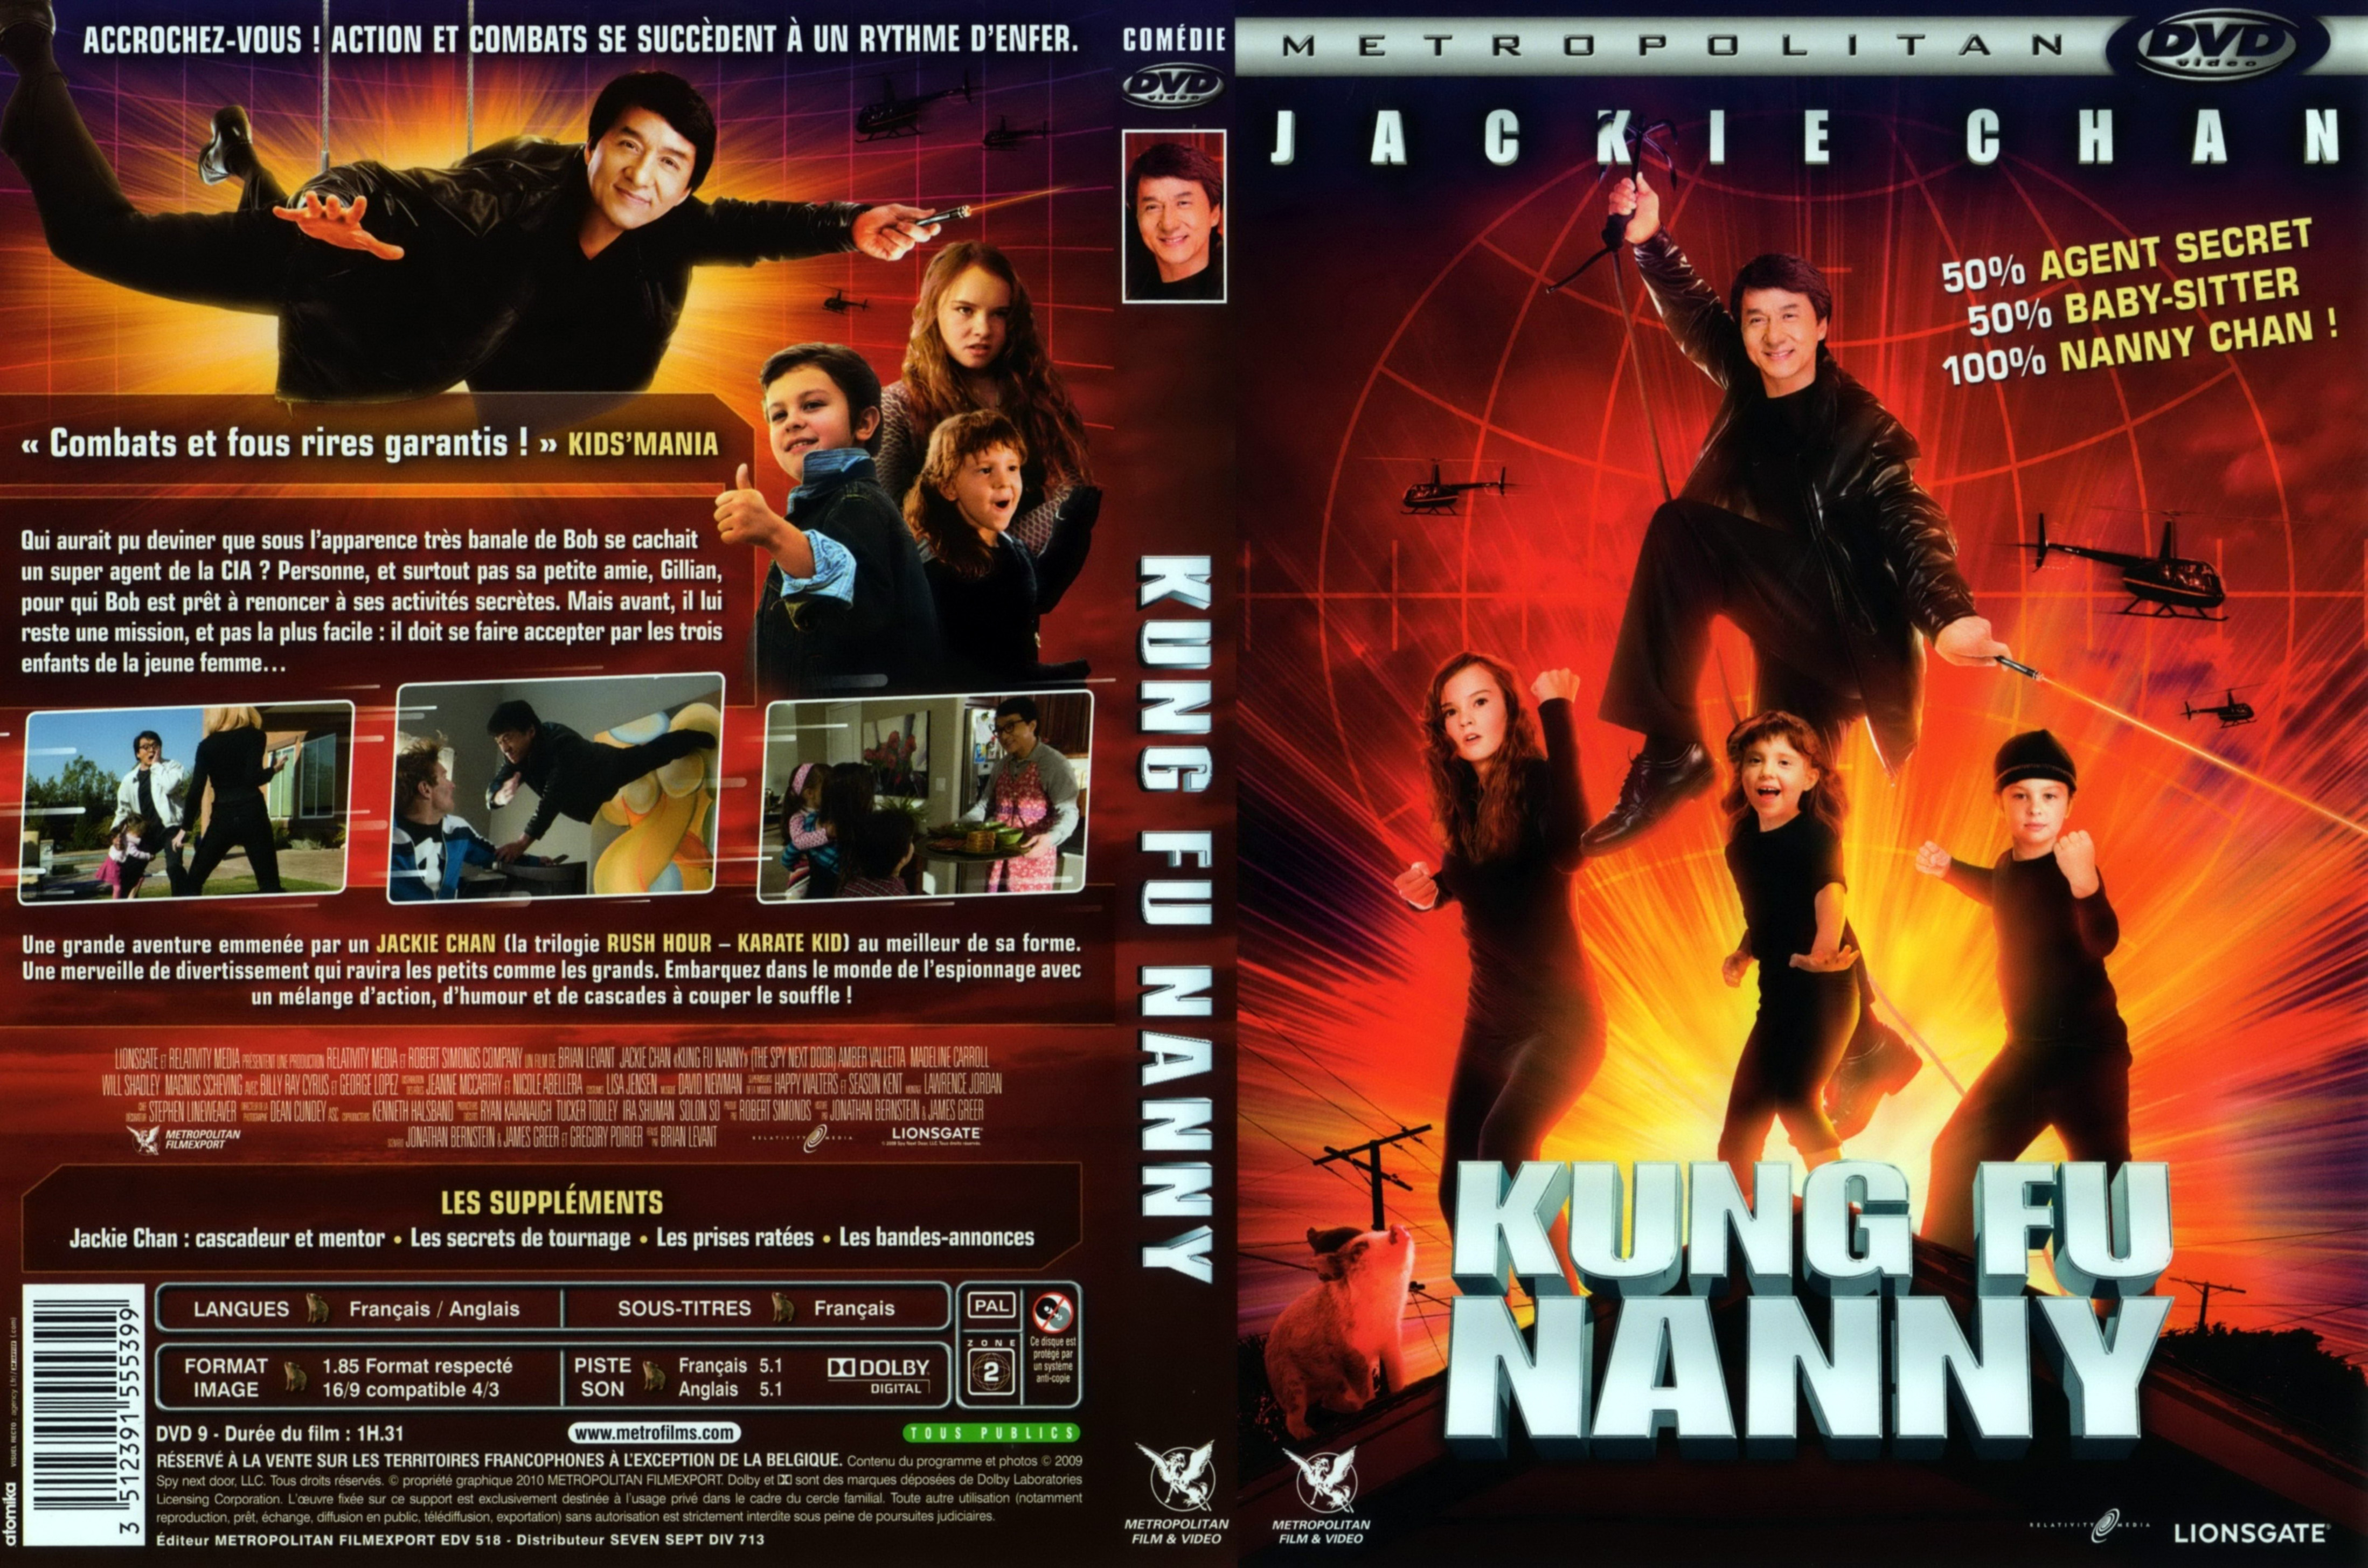 Jaquette DVD Kung fu nanny